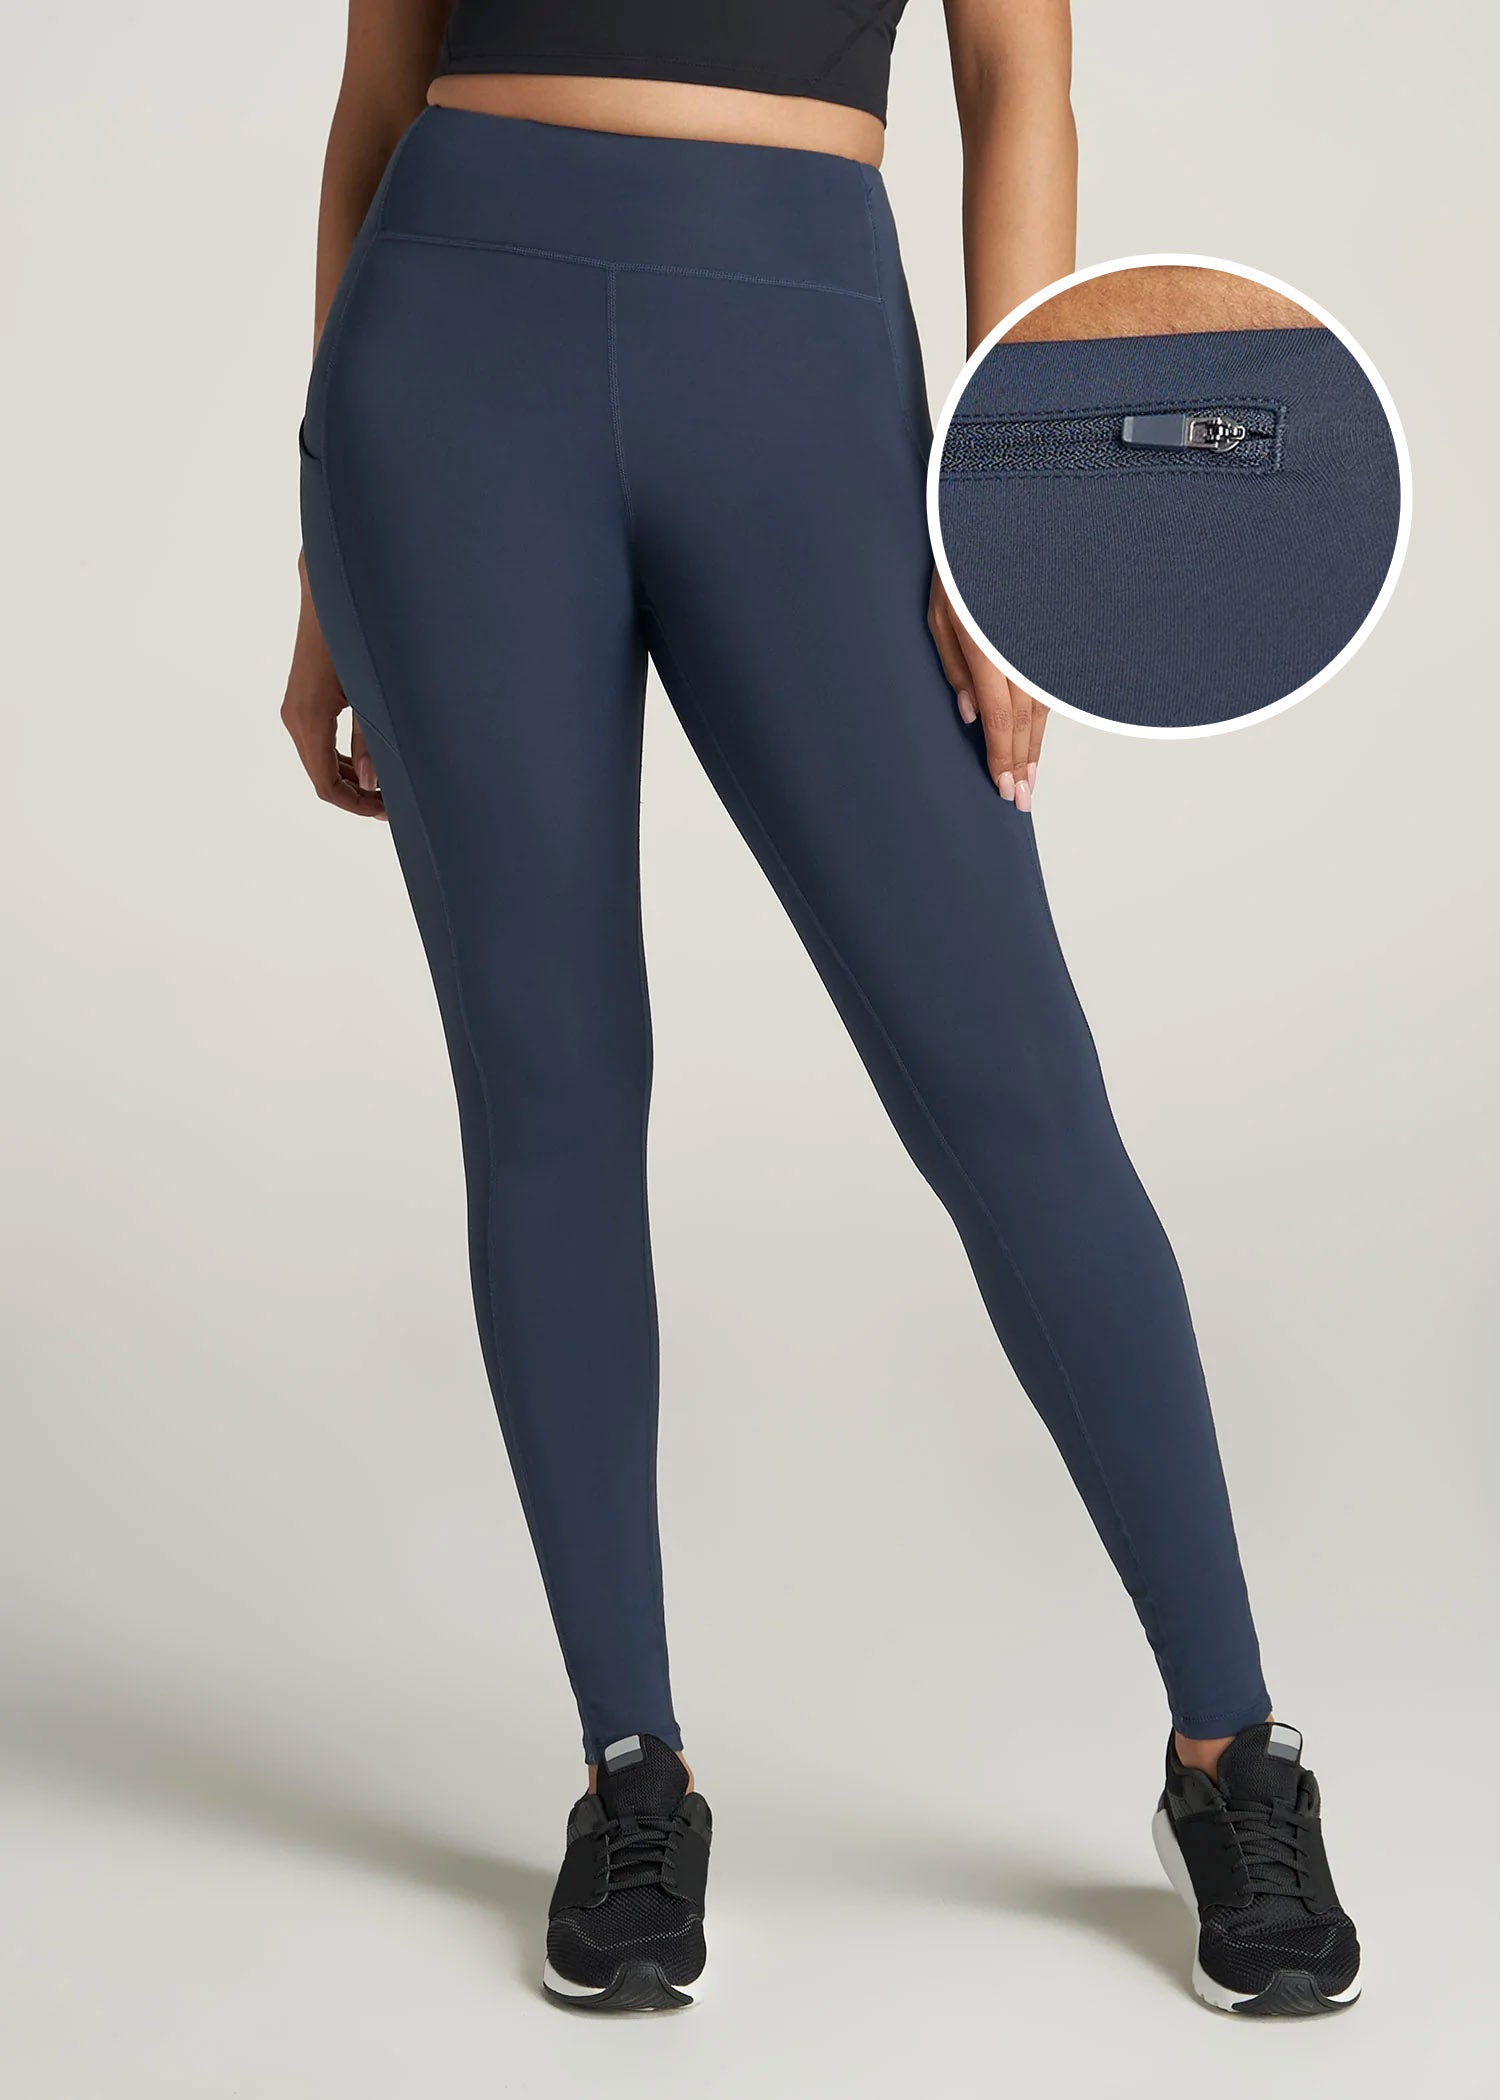 Women's Semi See-through Slim Fit Pants Elastic Bodywear Leggings Homewear  Lady Leggings